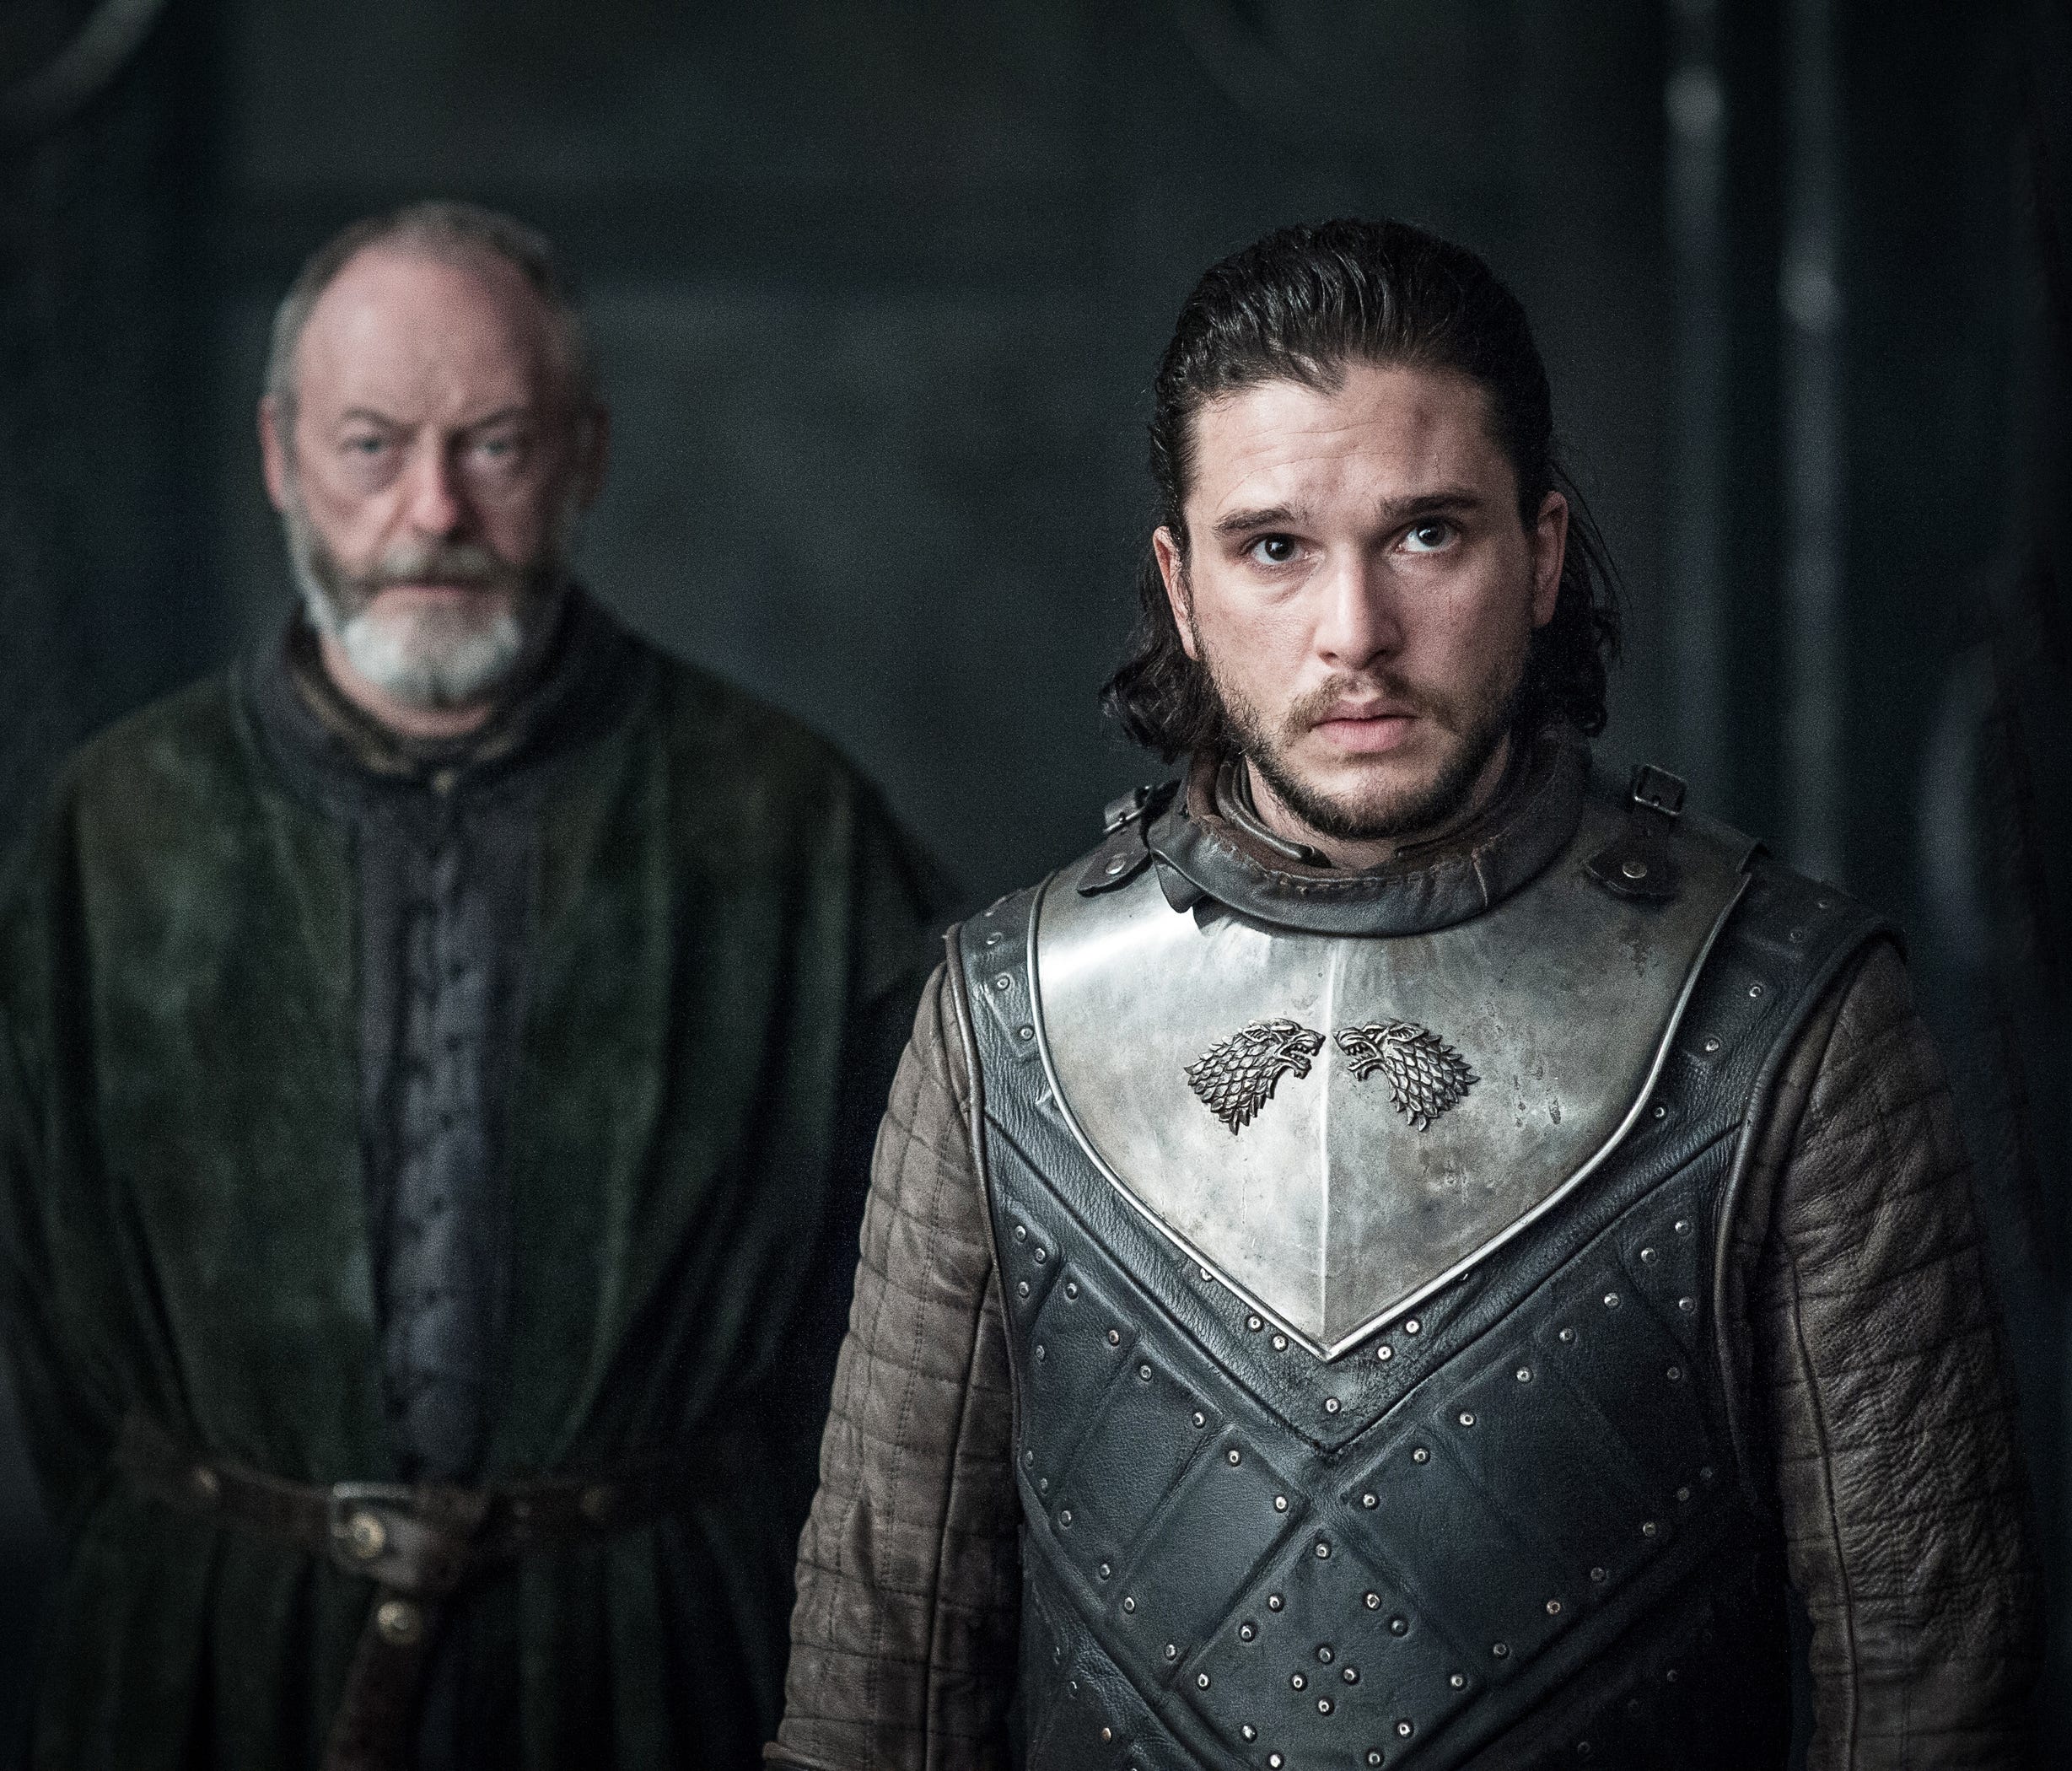 Davos and Jon in 'Game of Thrones' Season 7 Episode 3.